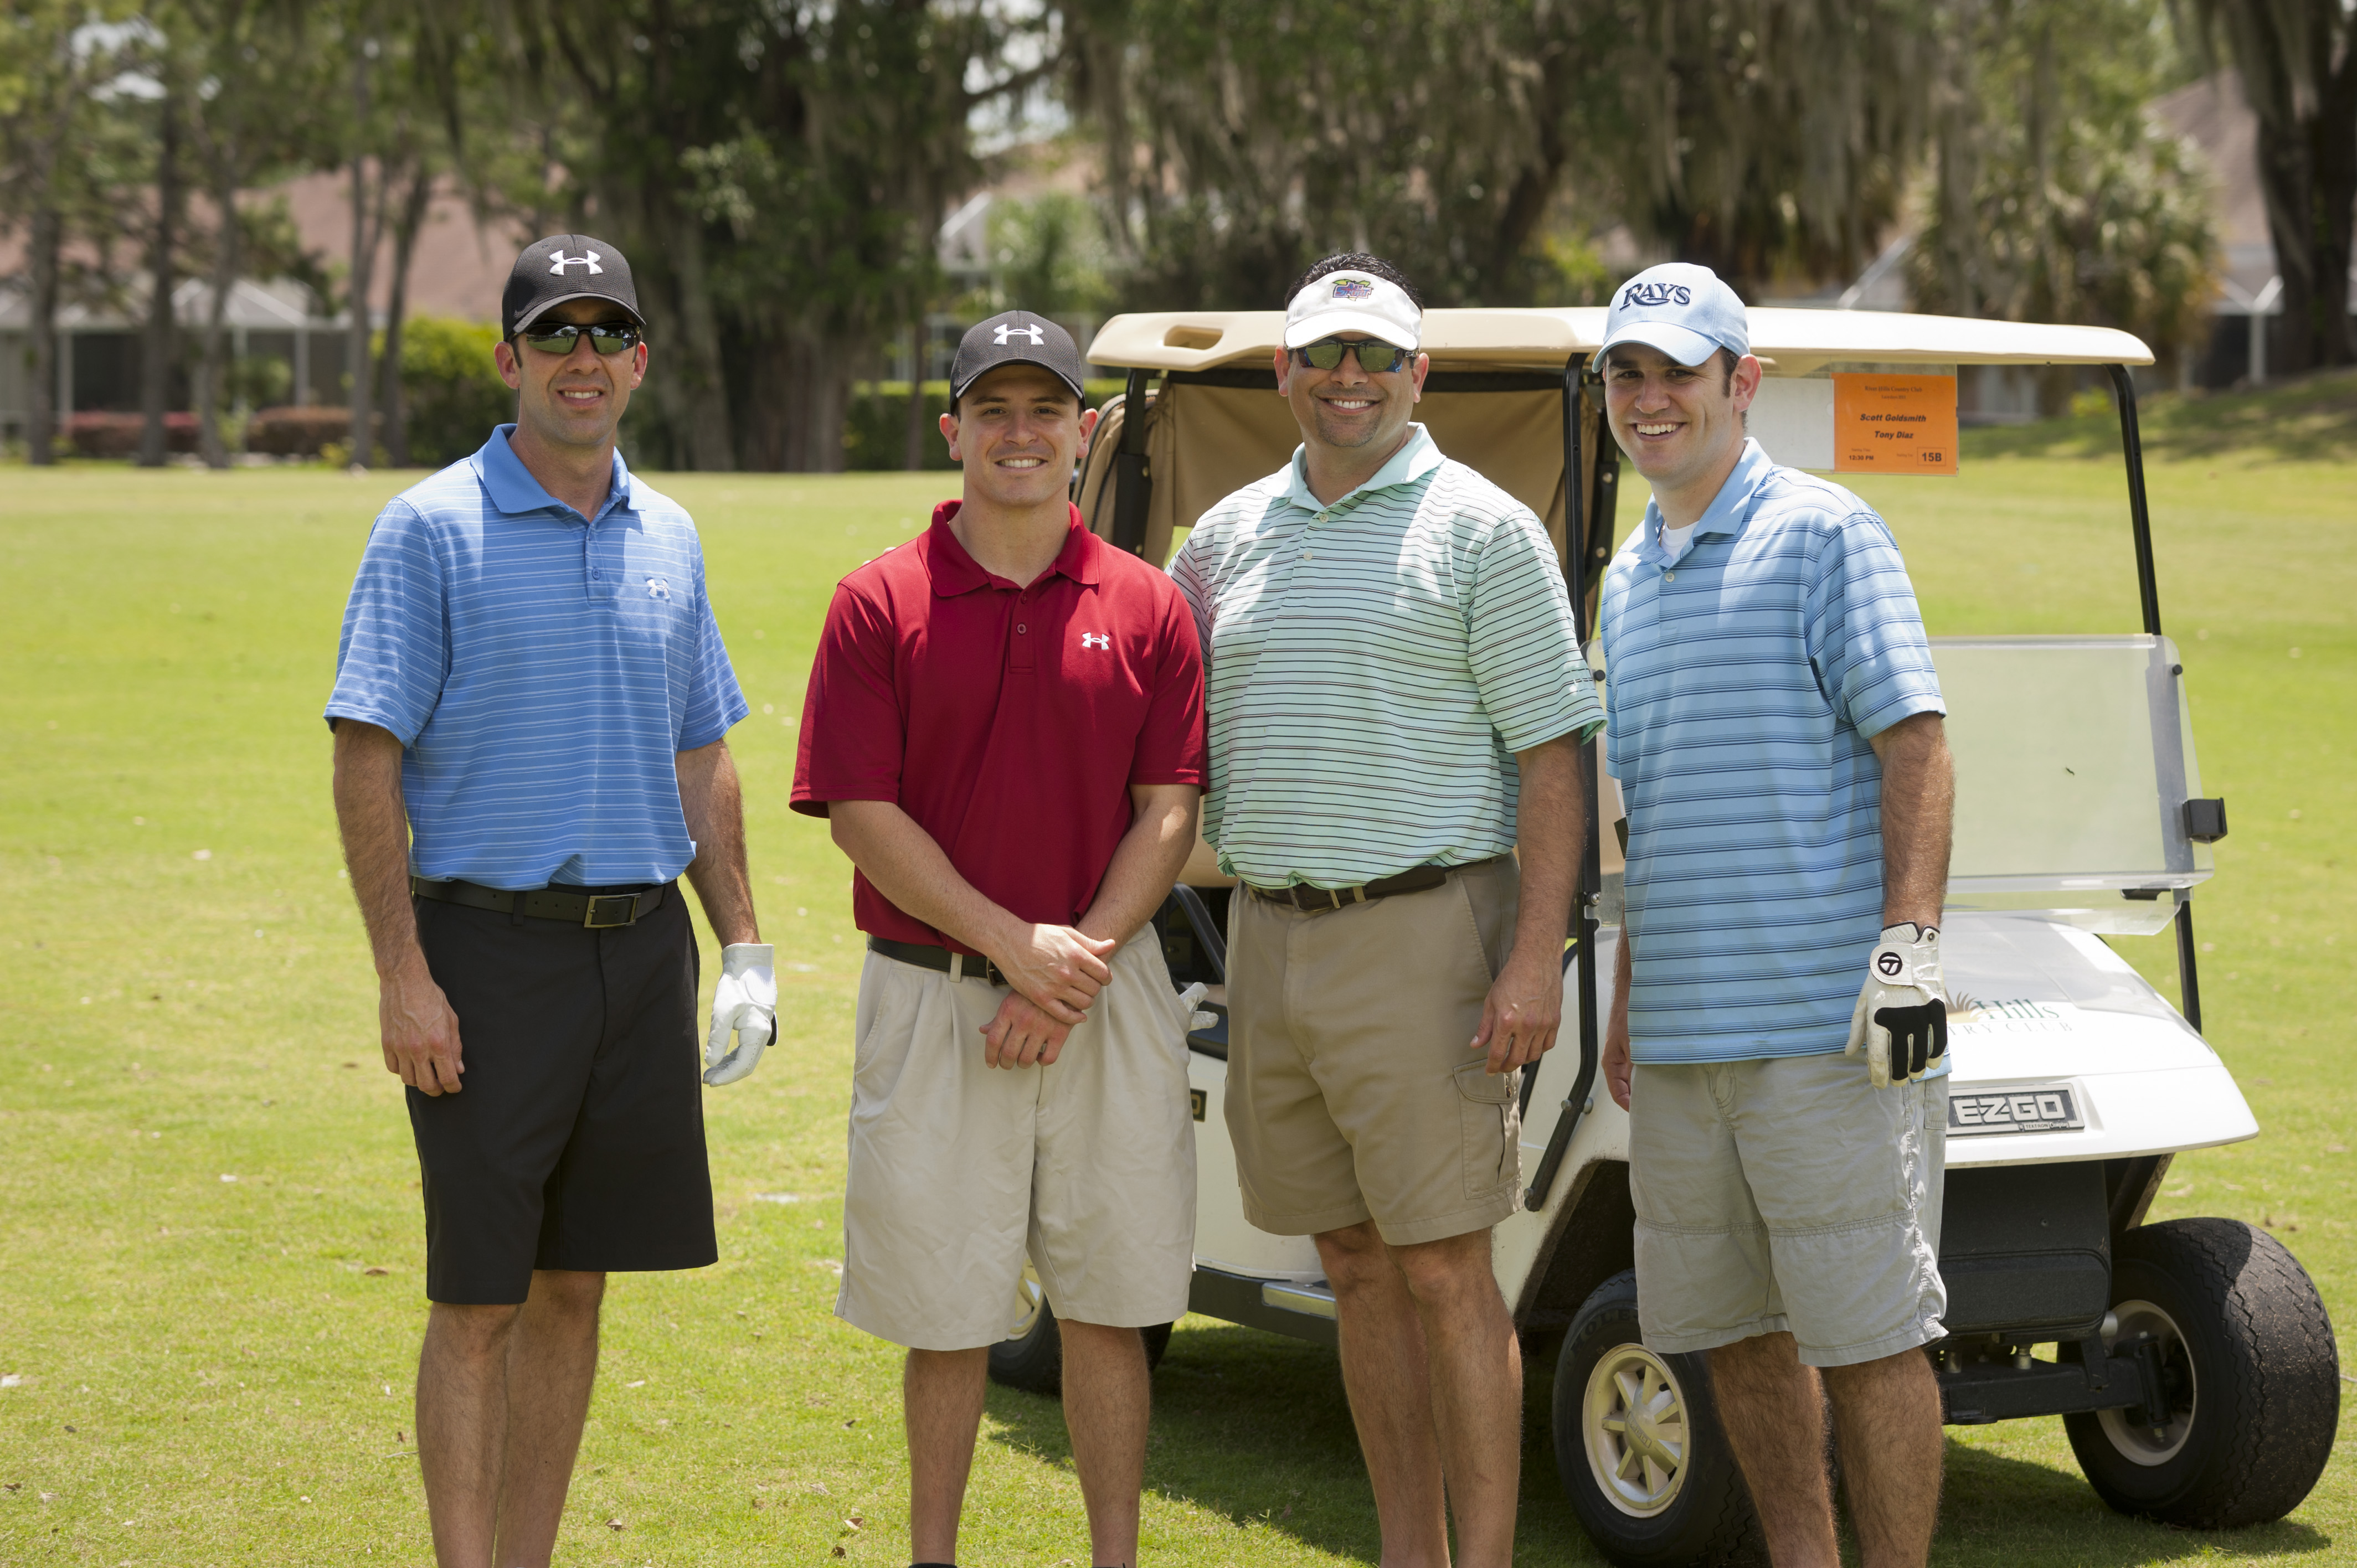 Lazydays Employee Foundation 3rd Annual Golf Tournament